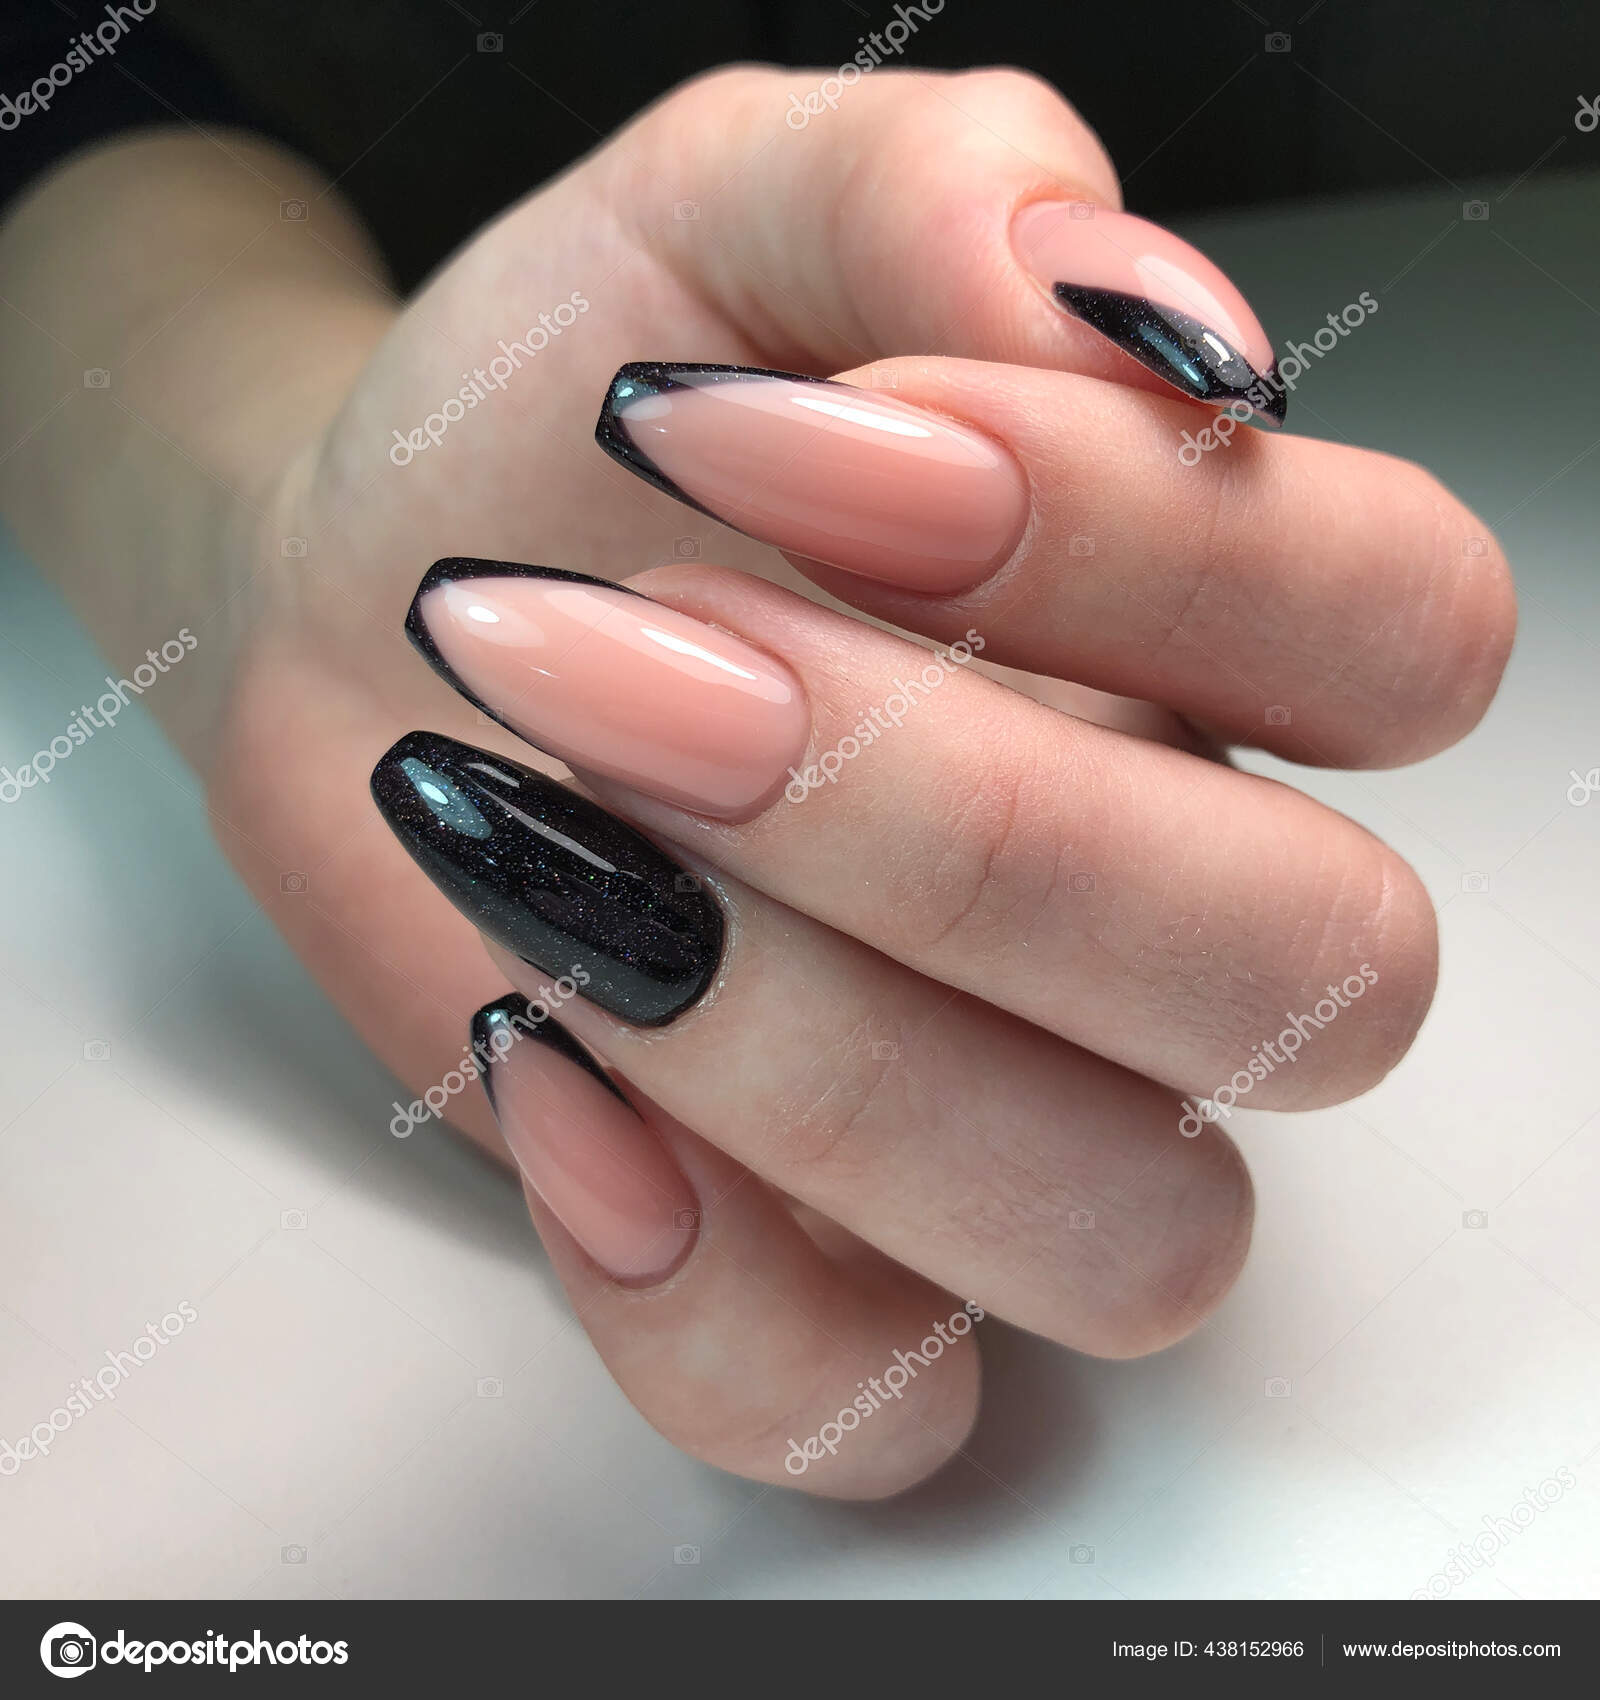 French Manicure Nails Manicure Gel Nail Polish Spa Concept Stock Photo ©bo.kvk 438152966